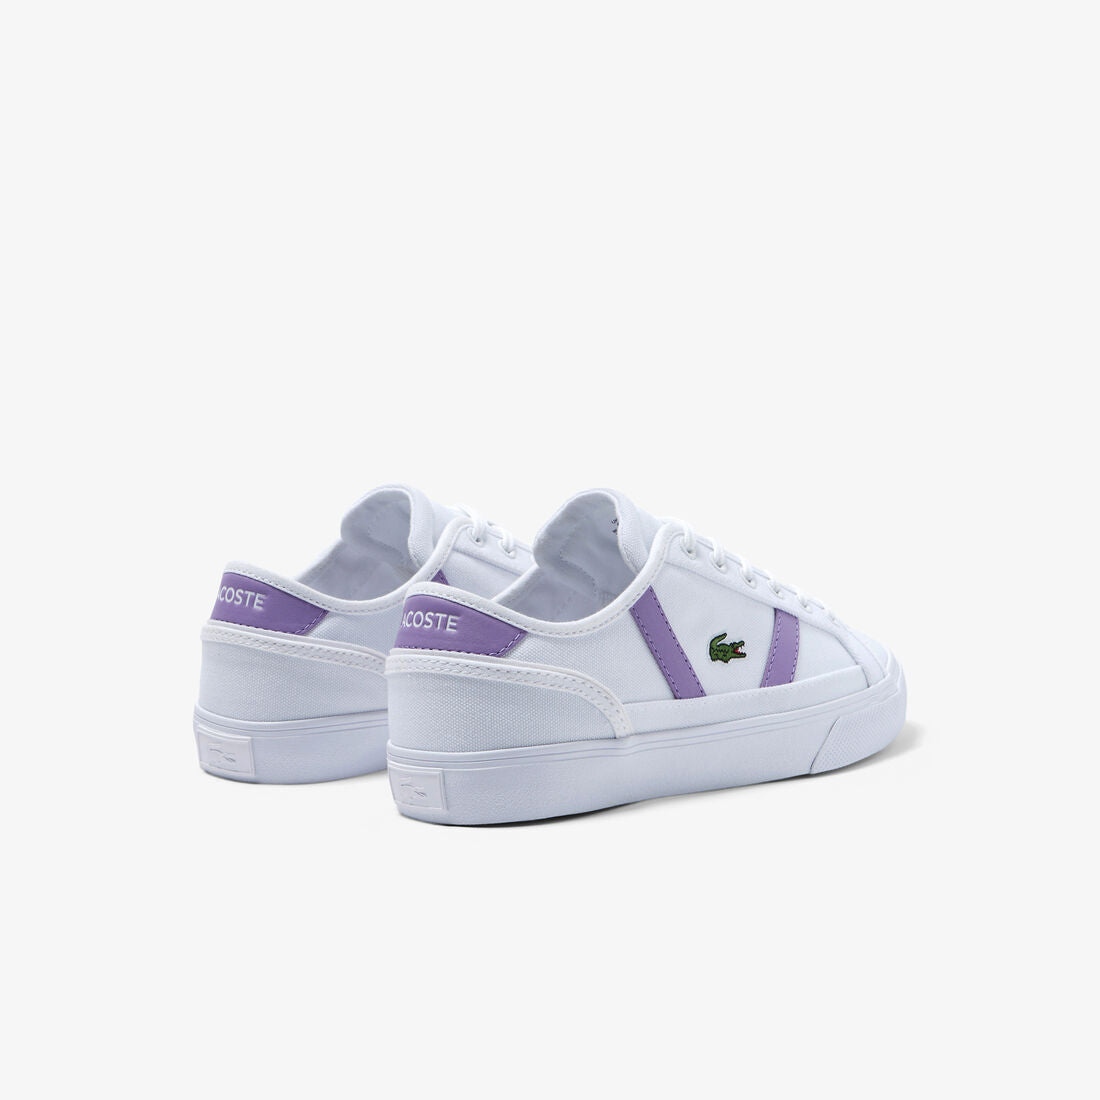 Lacoste - Sideline Pro 222 3 Colour Pop Sneaker - White/Purple